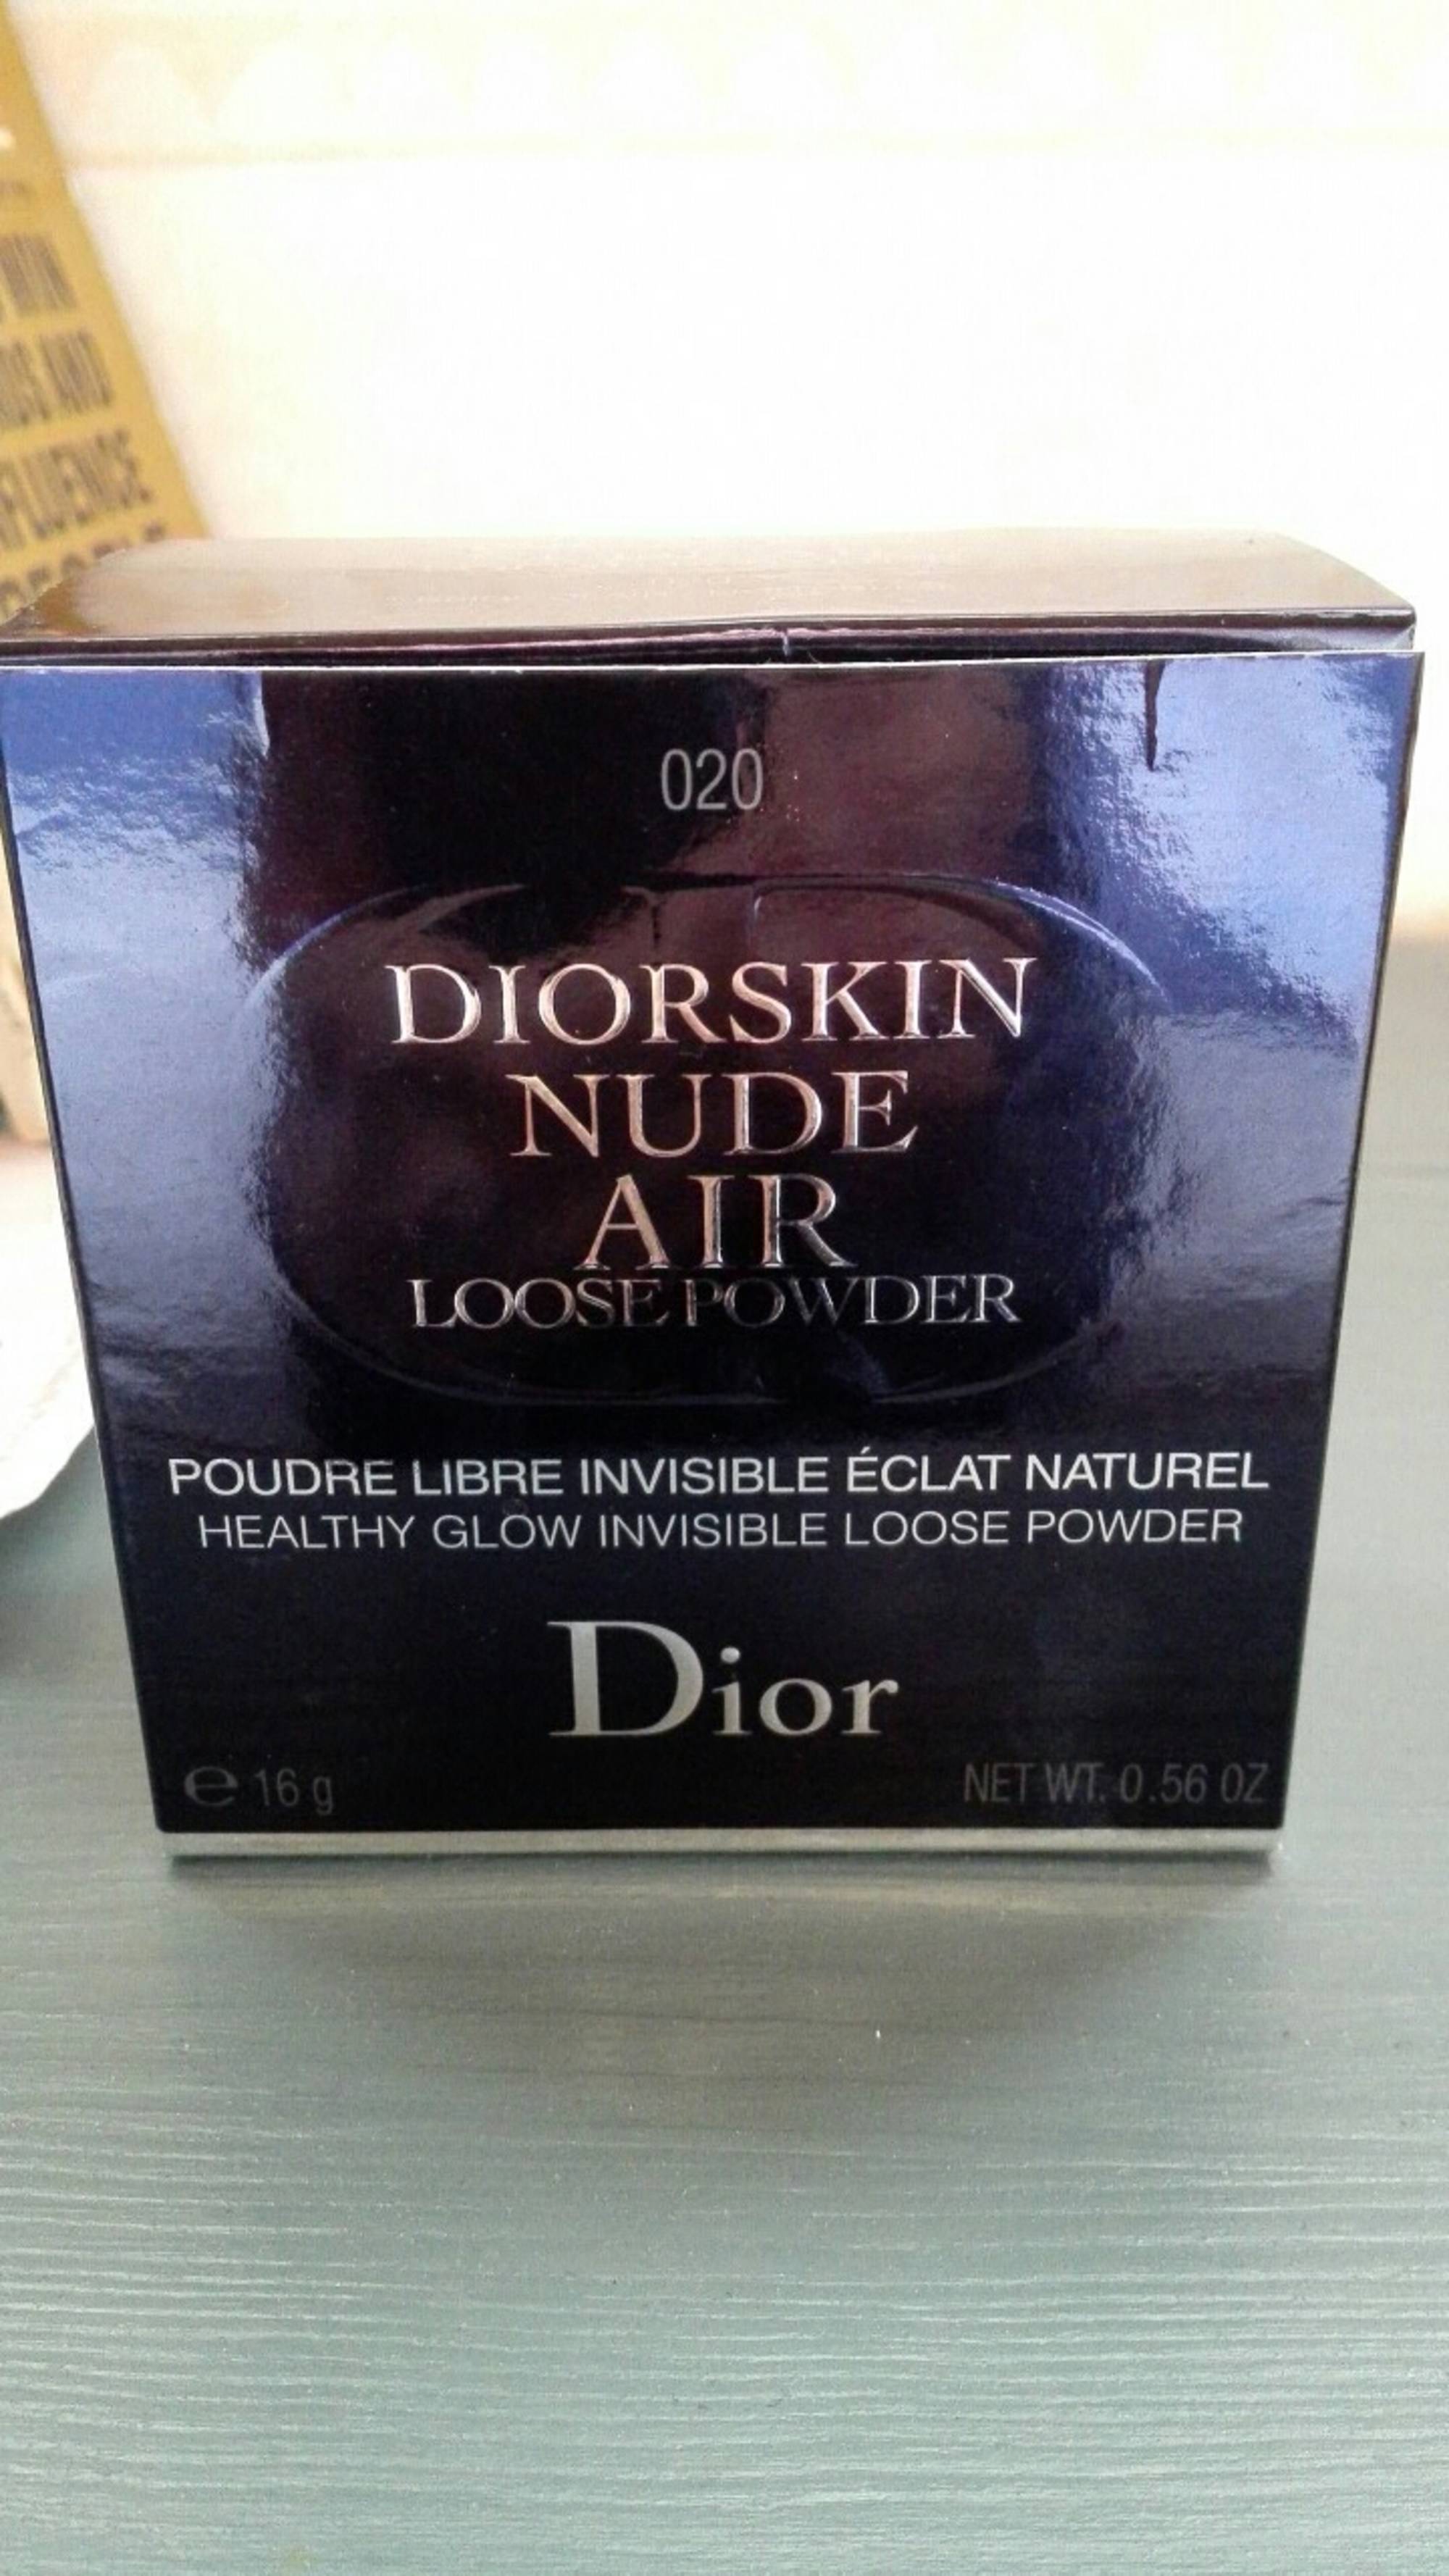 DIOR - Diorskin nude air - Poudre libre invisible éclat nature 020